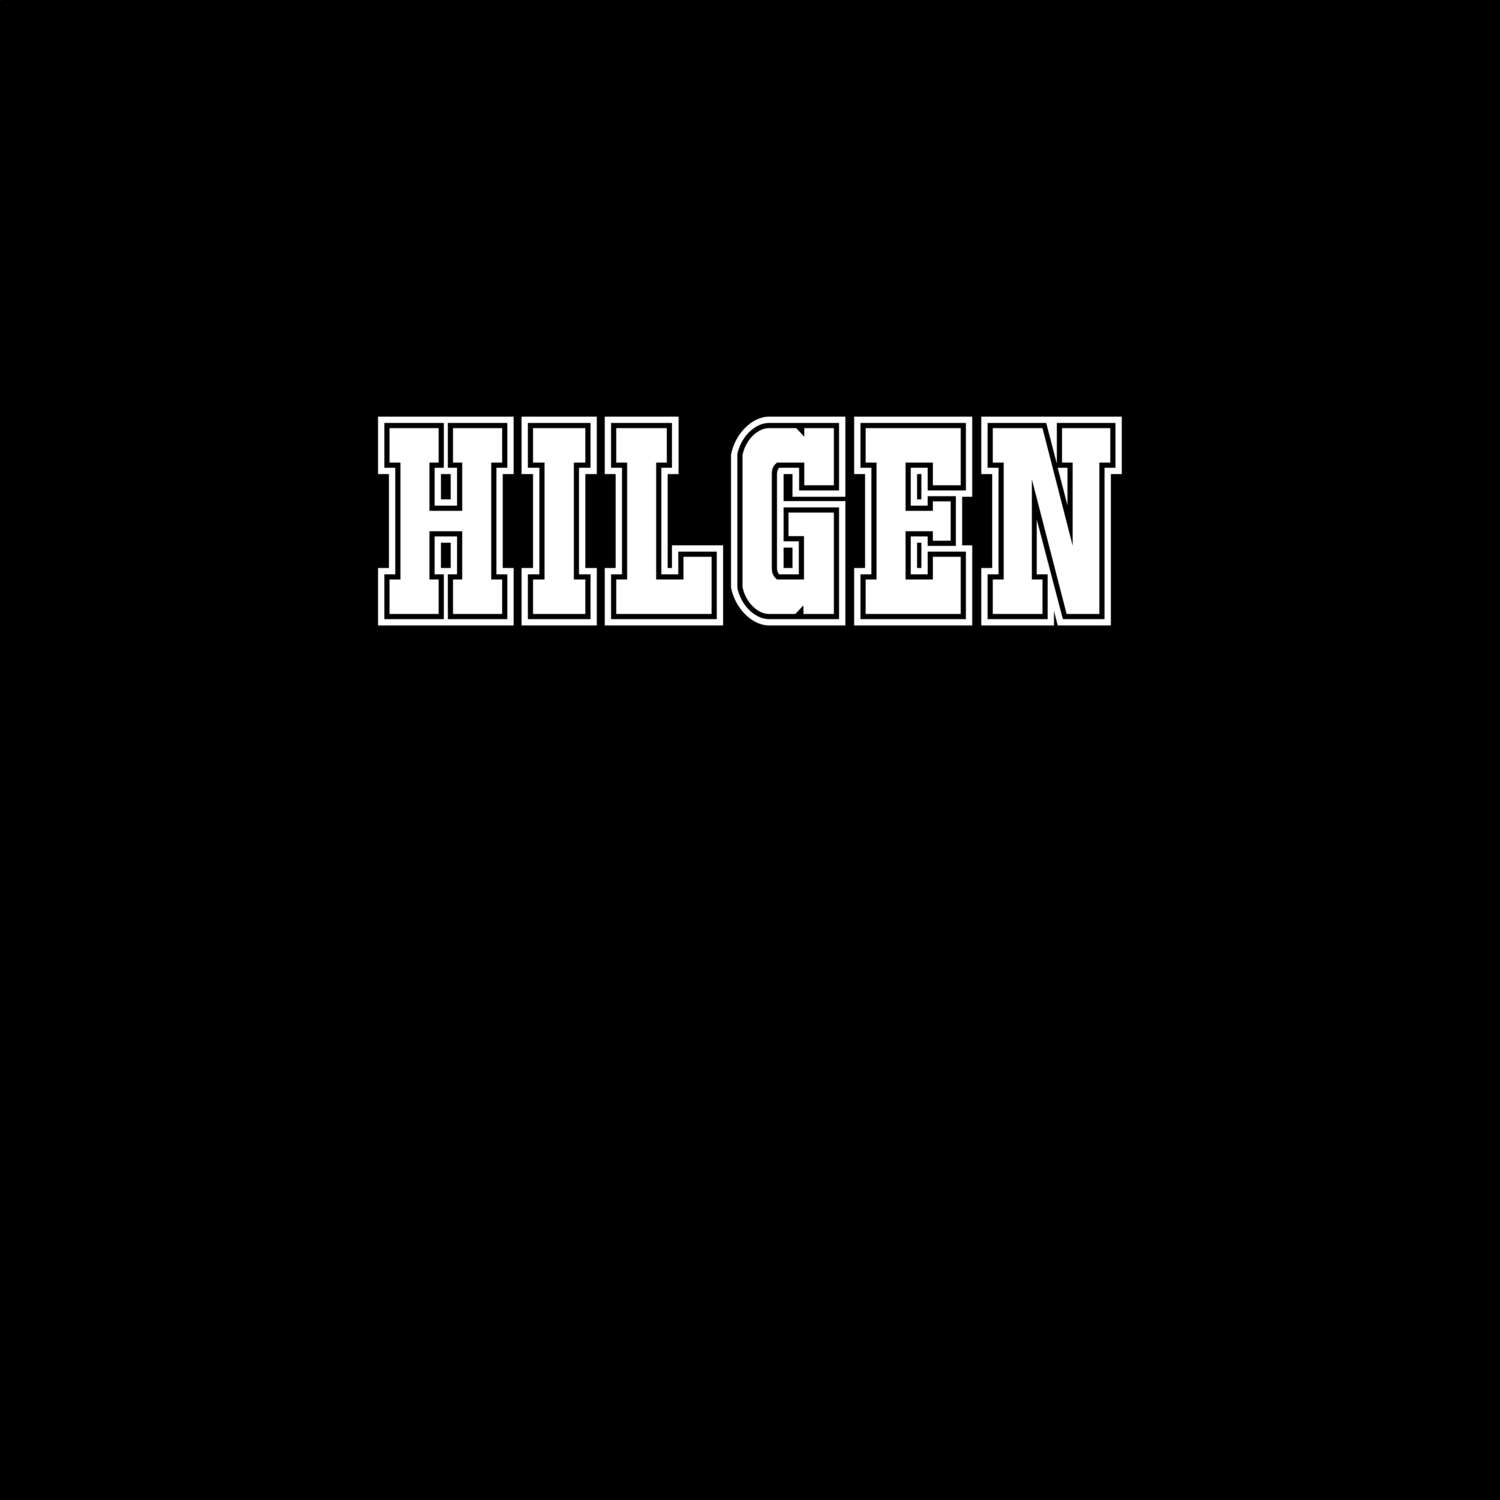 Hilgen T-Shirt »Classic«